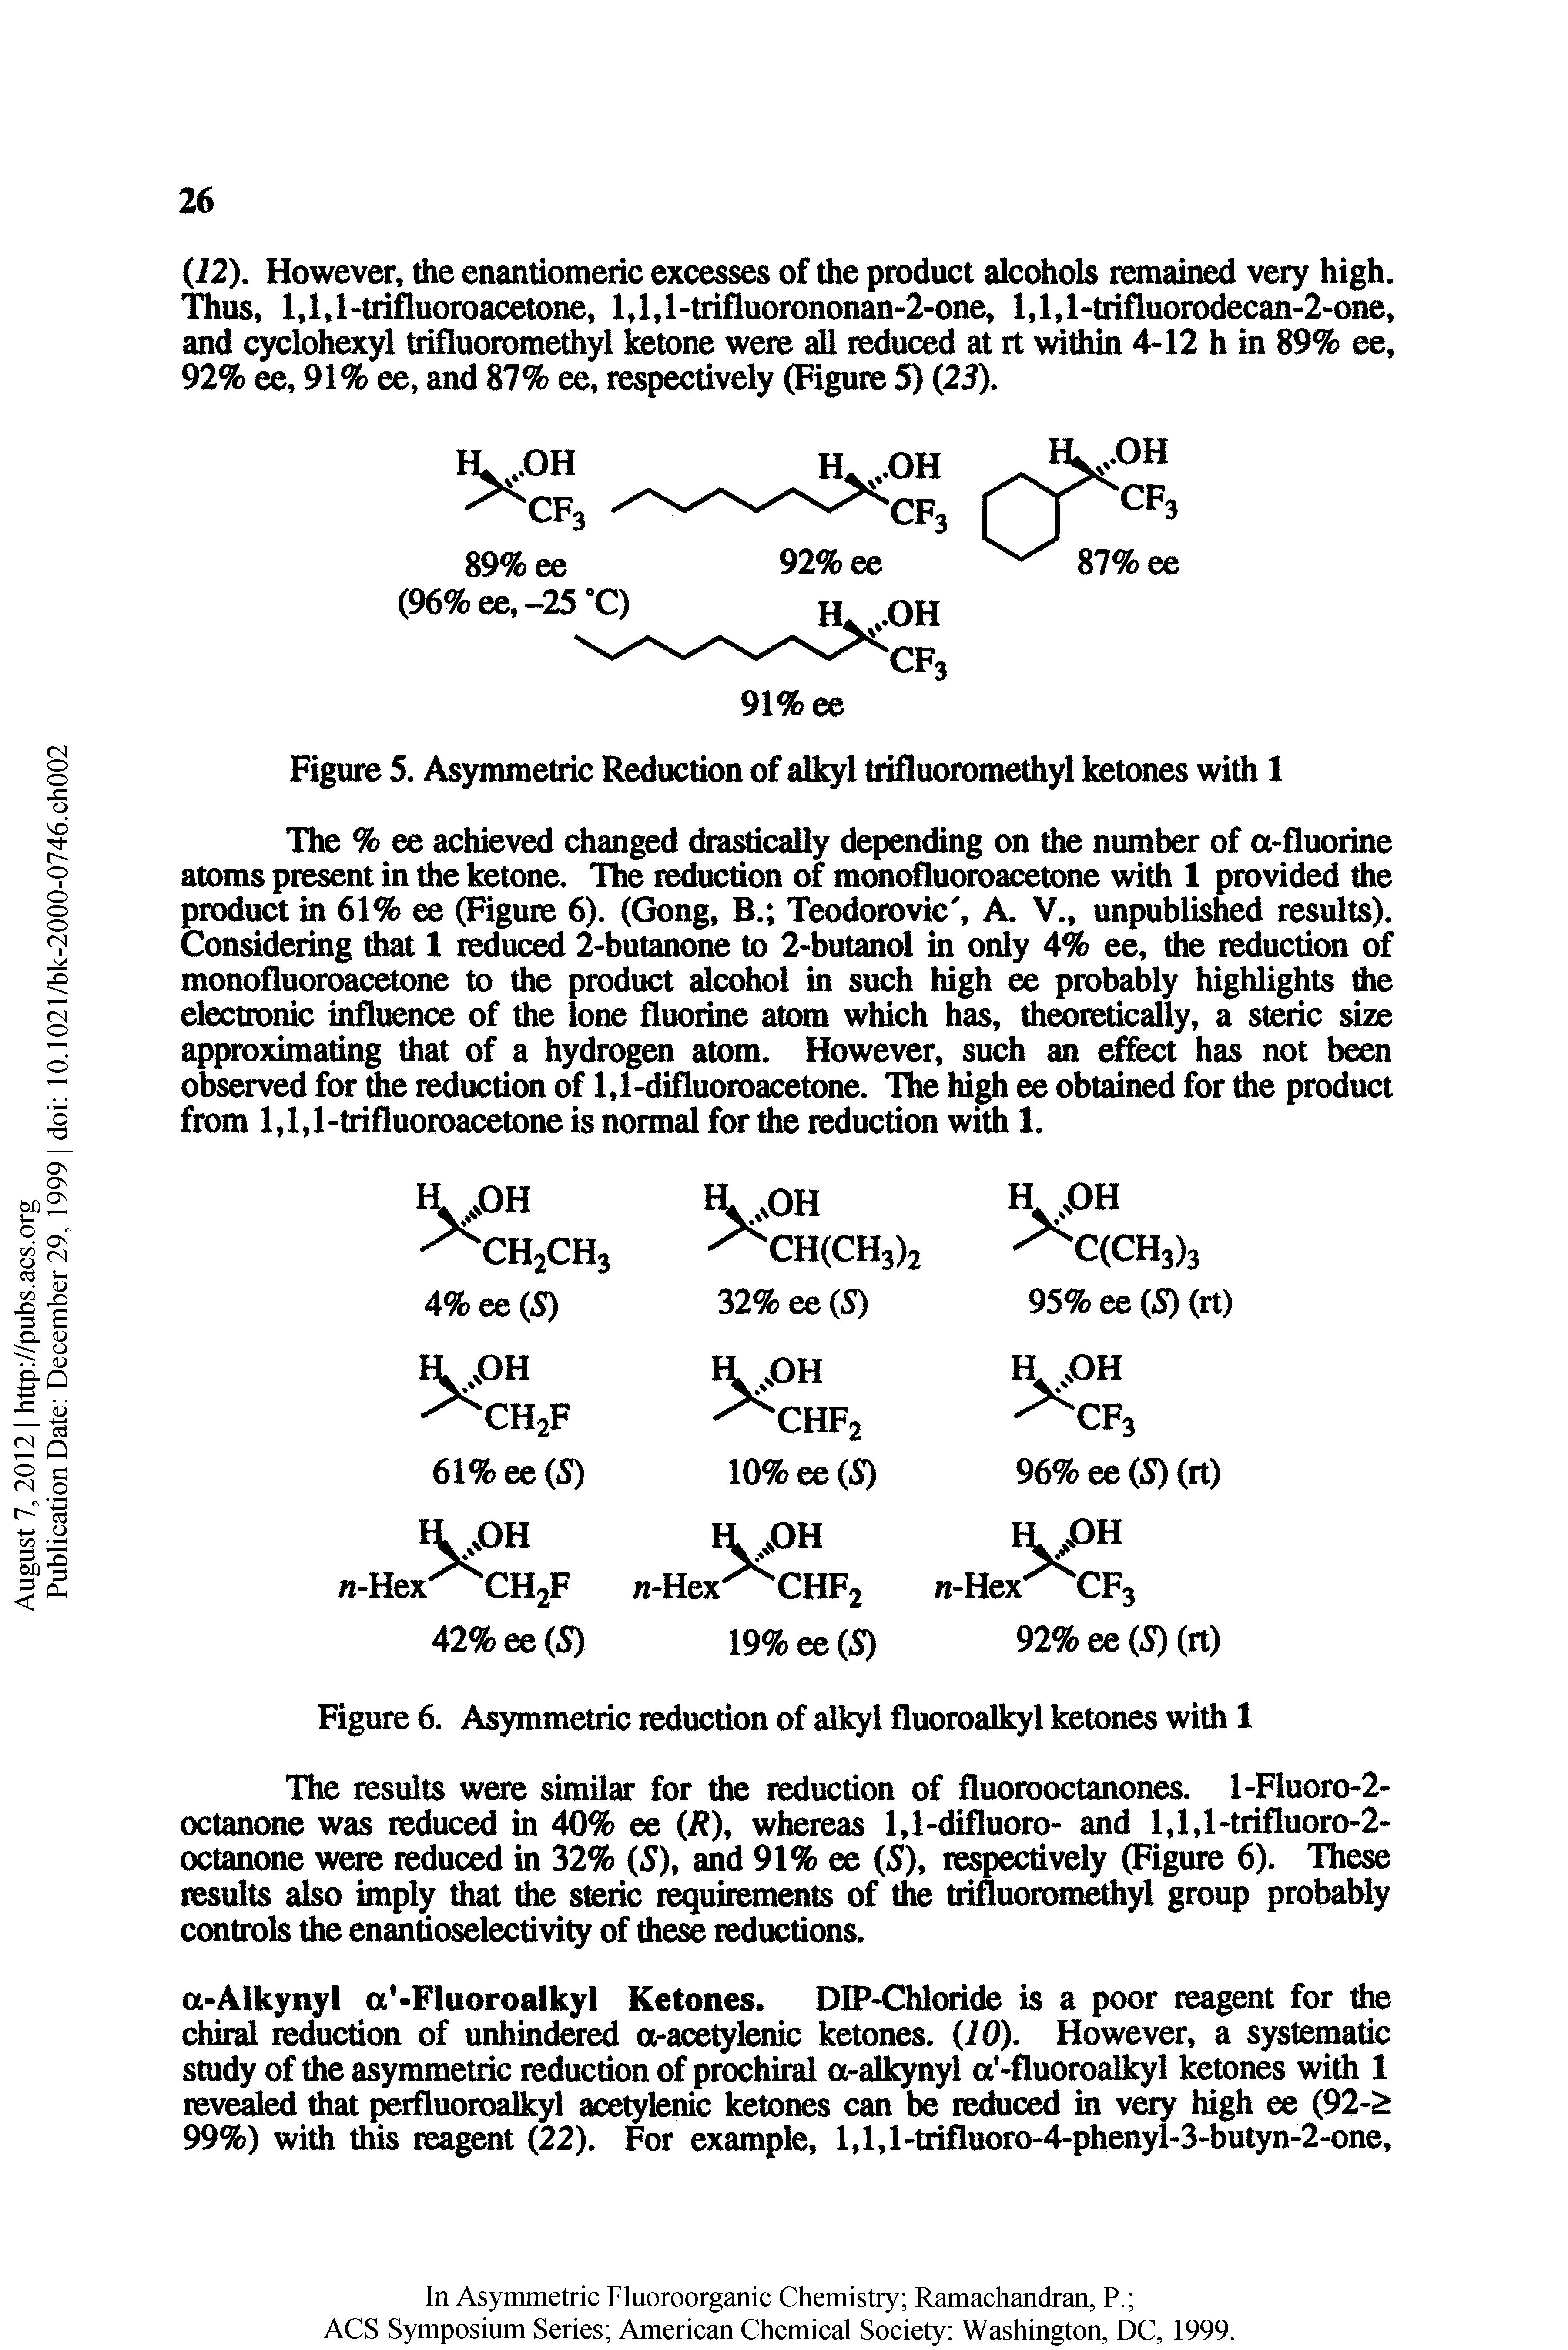 Figure S. Asymmetric Reduction of alkyl trifluoromethyl ketones with 1...